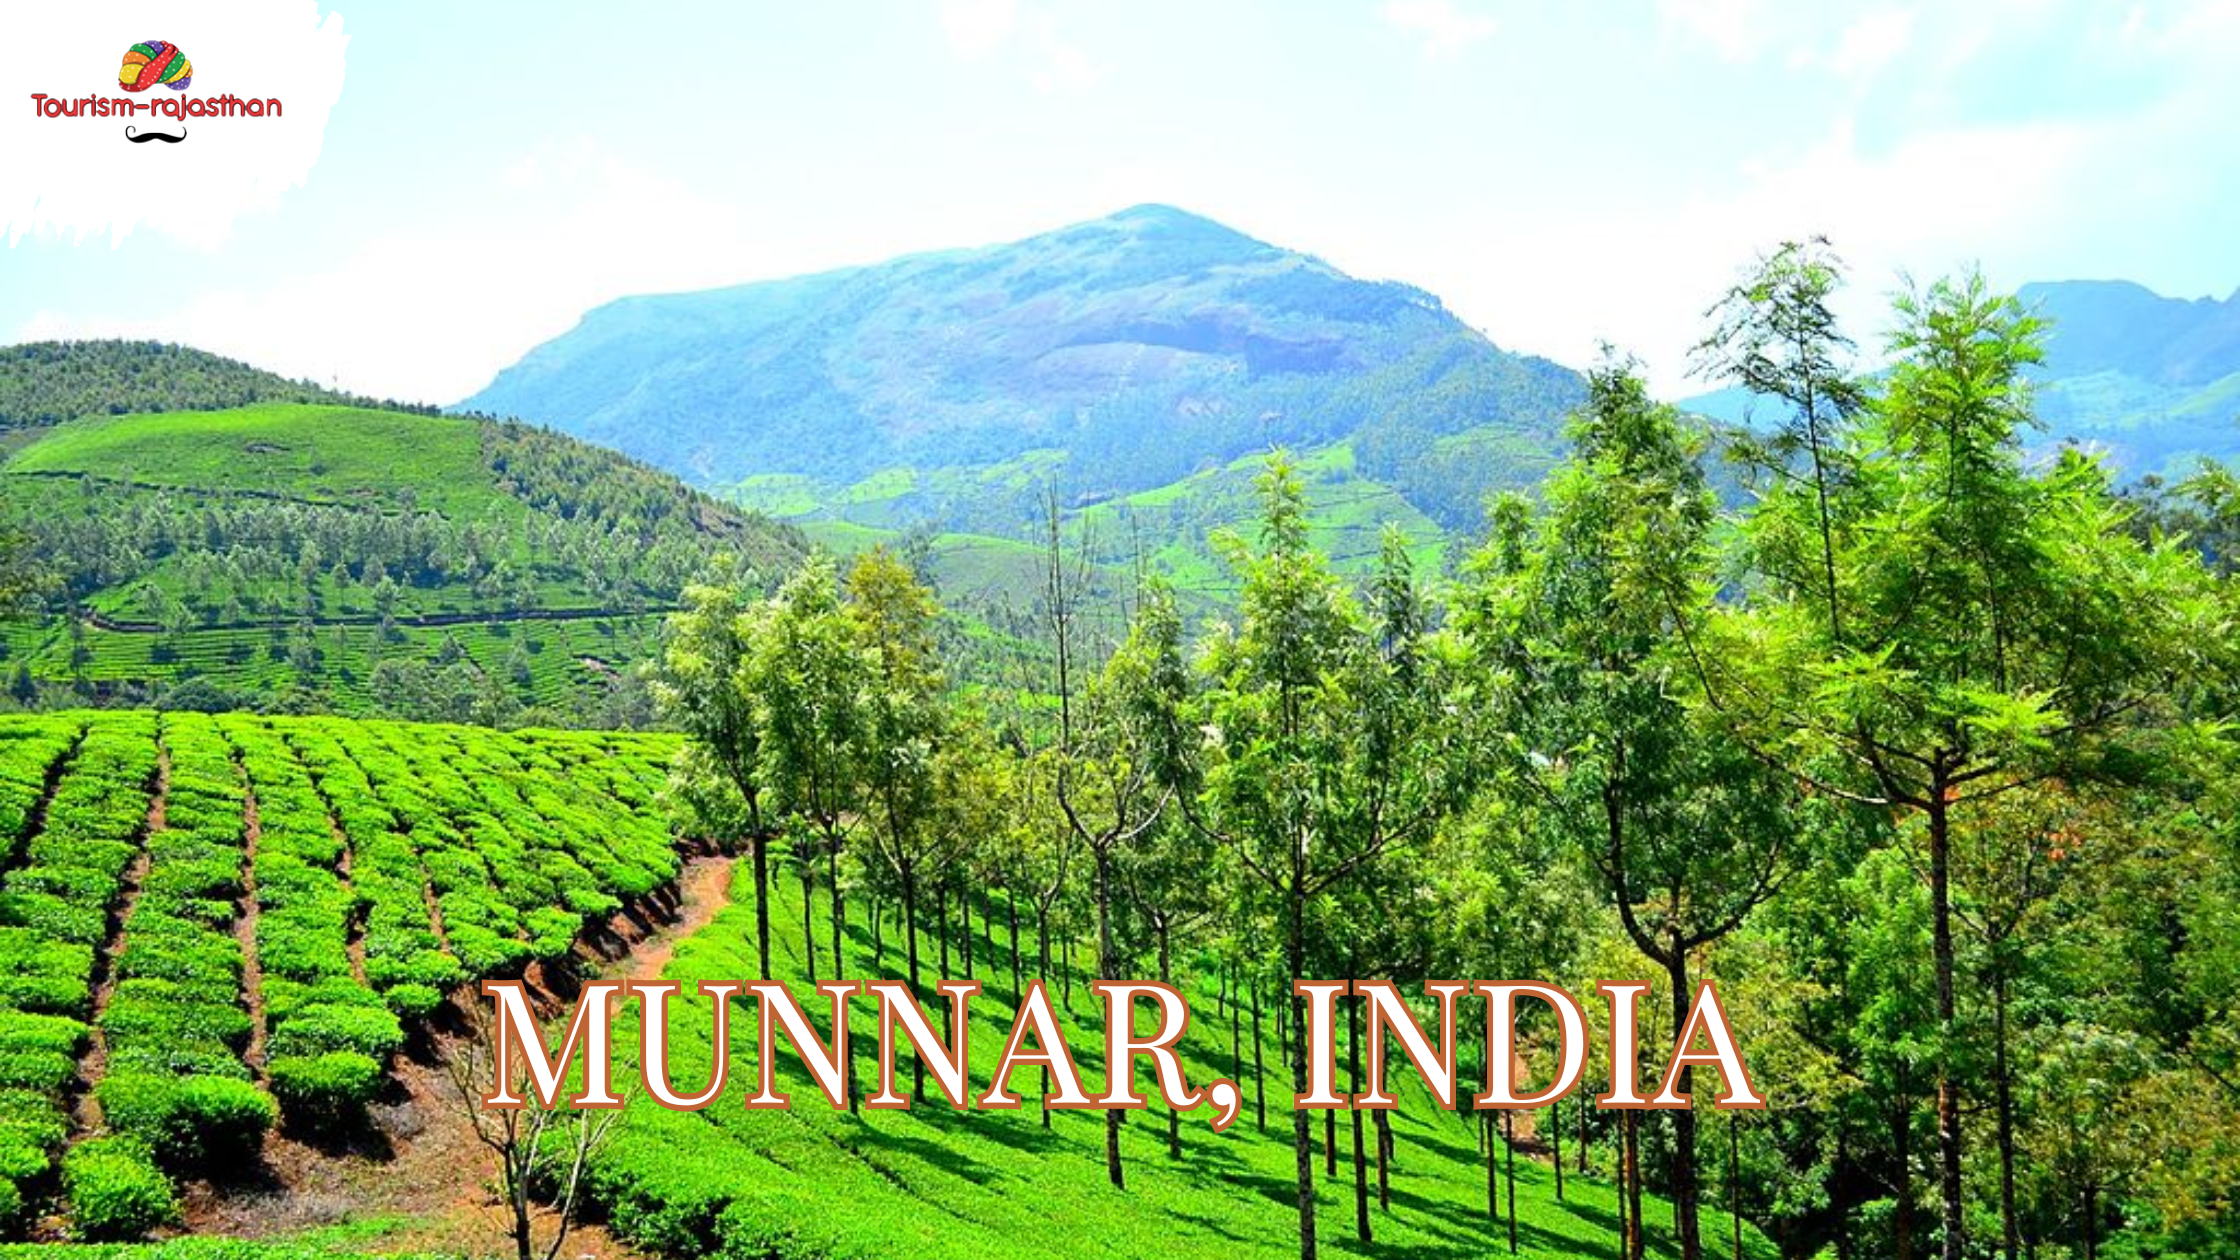 Munnar, India